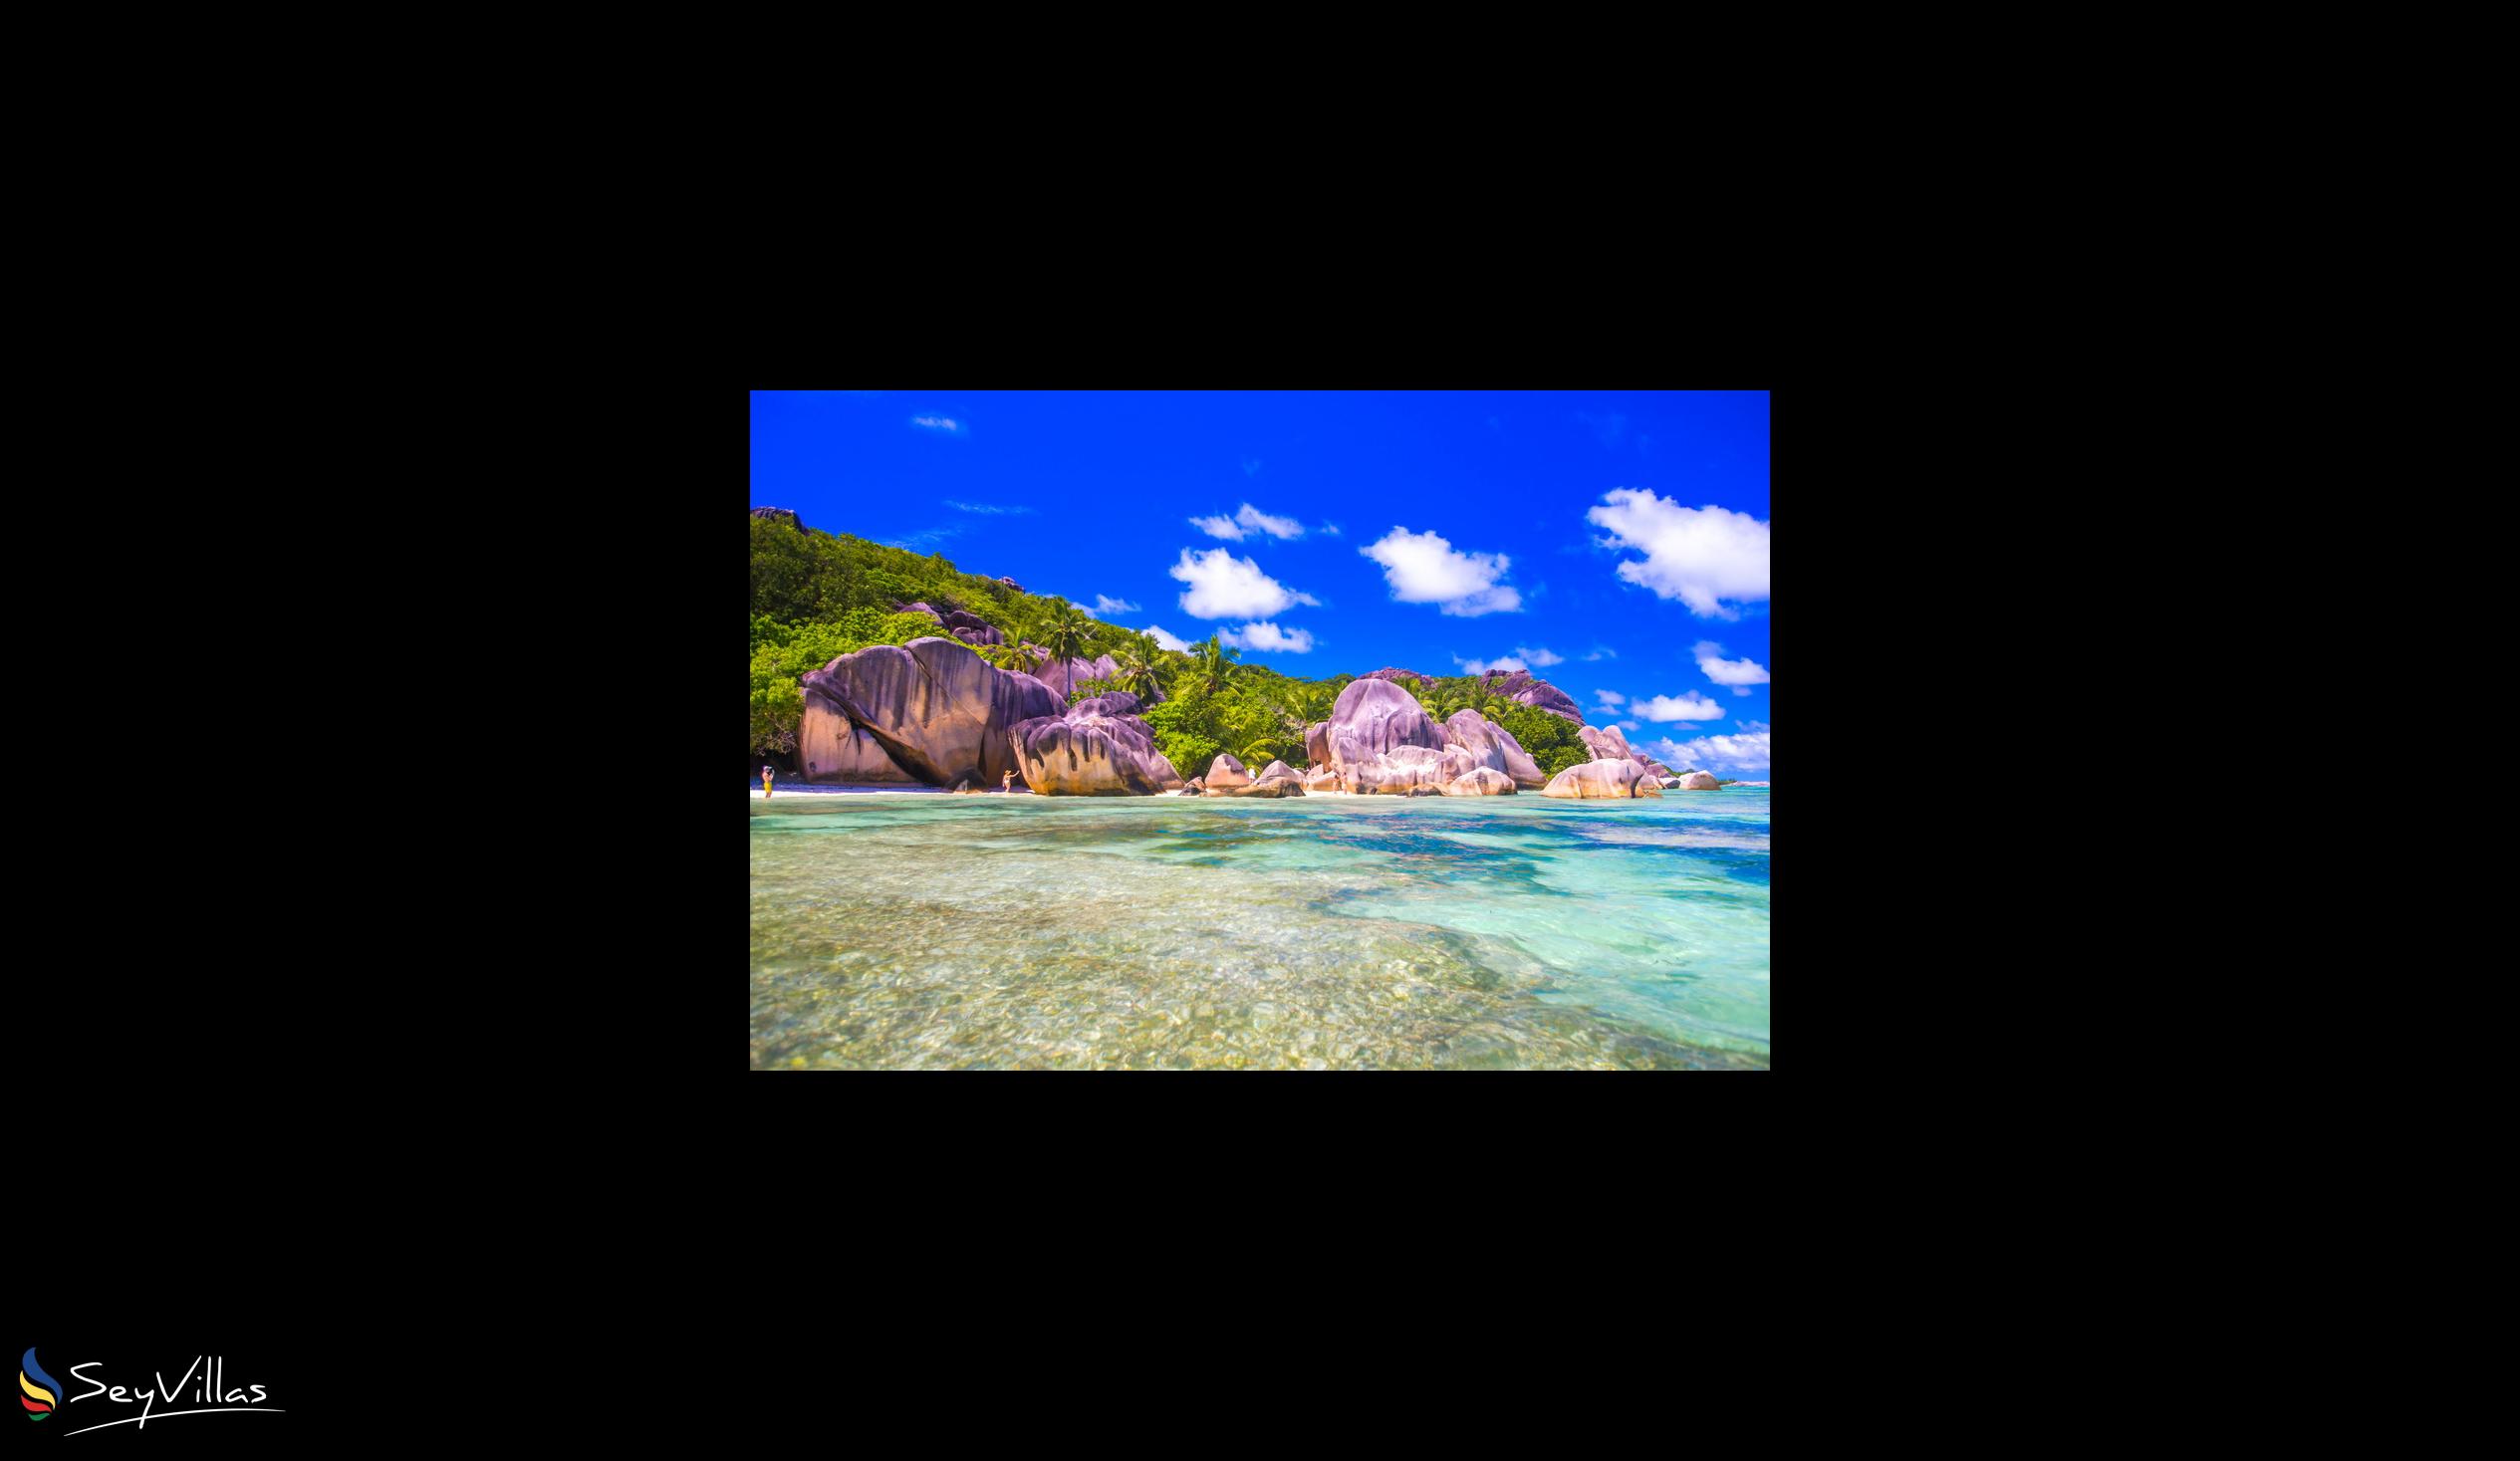 Photo 26: Ambiance Villa - Location - La Digue (Seychelles)